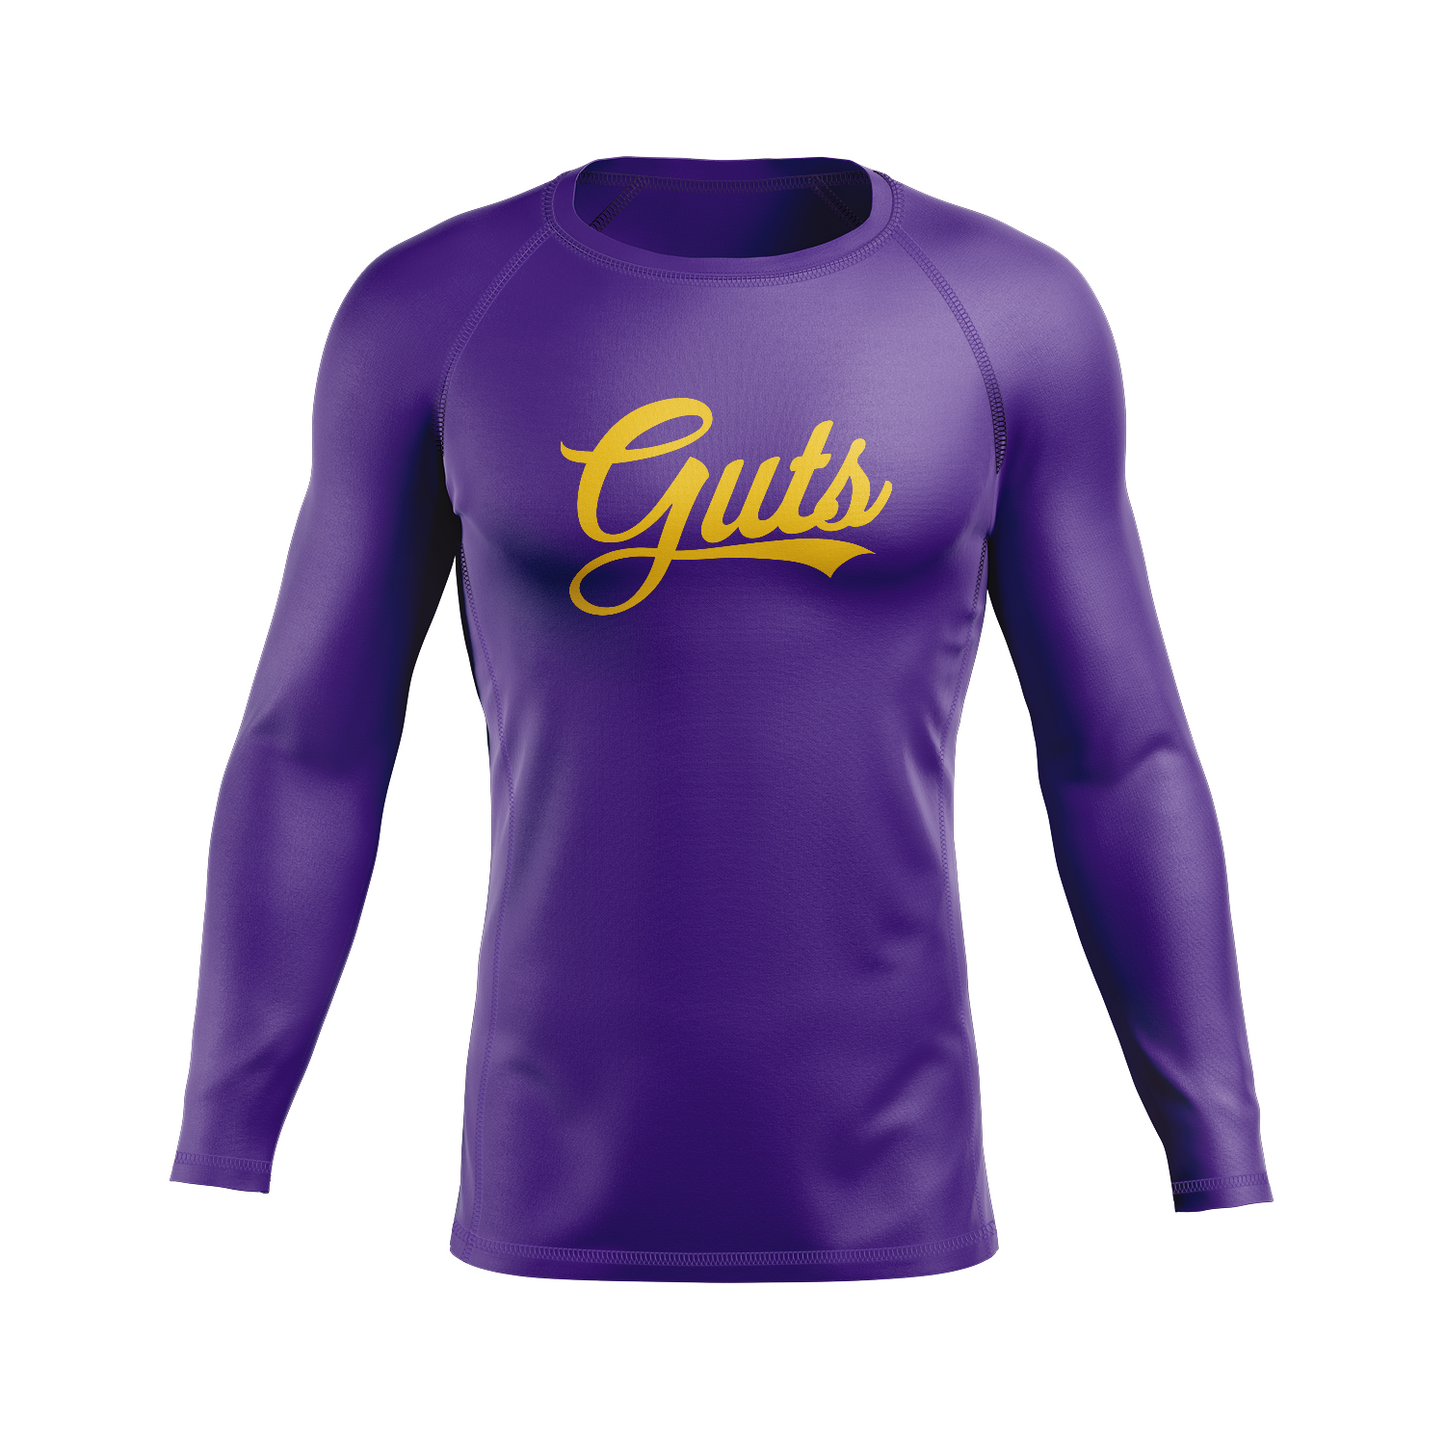 Guts Ranked men's rash guard, athl. gold on purple